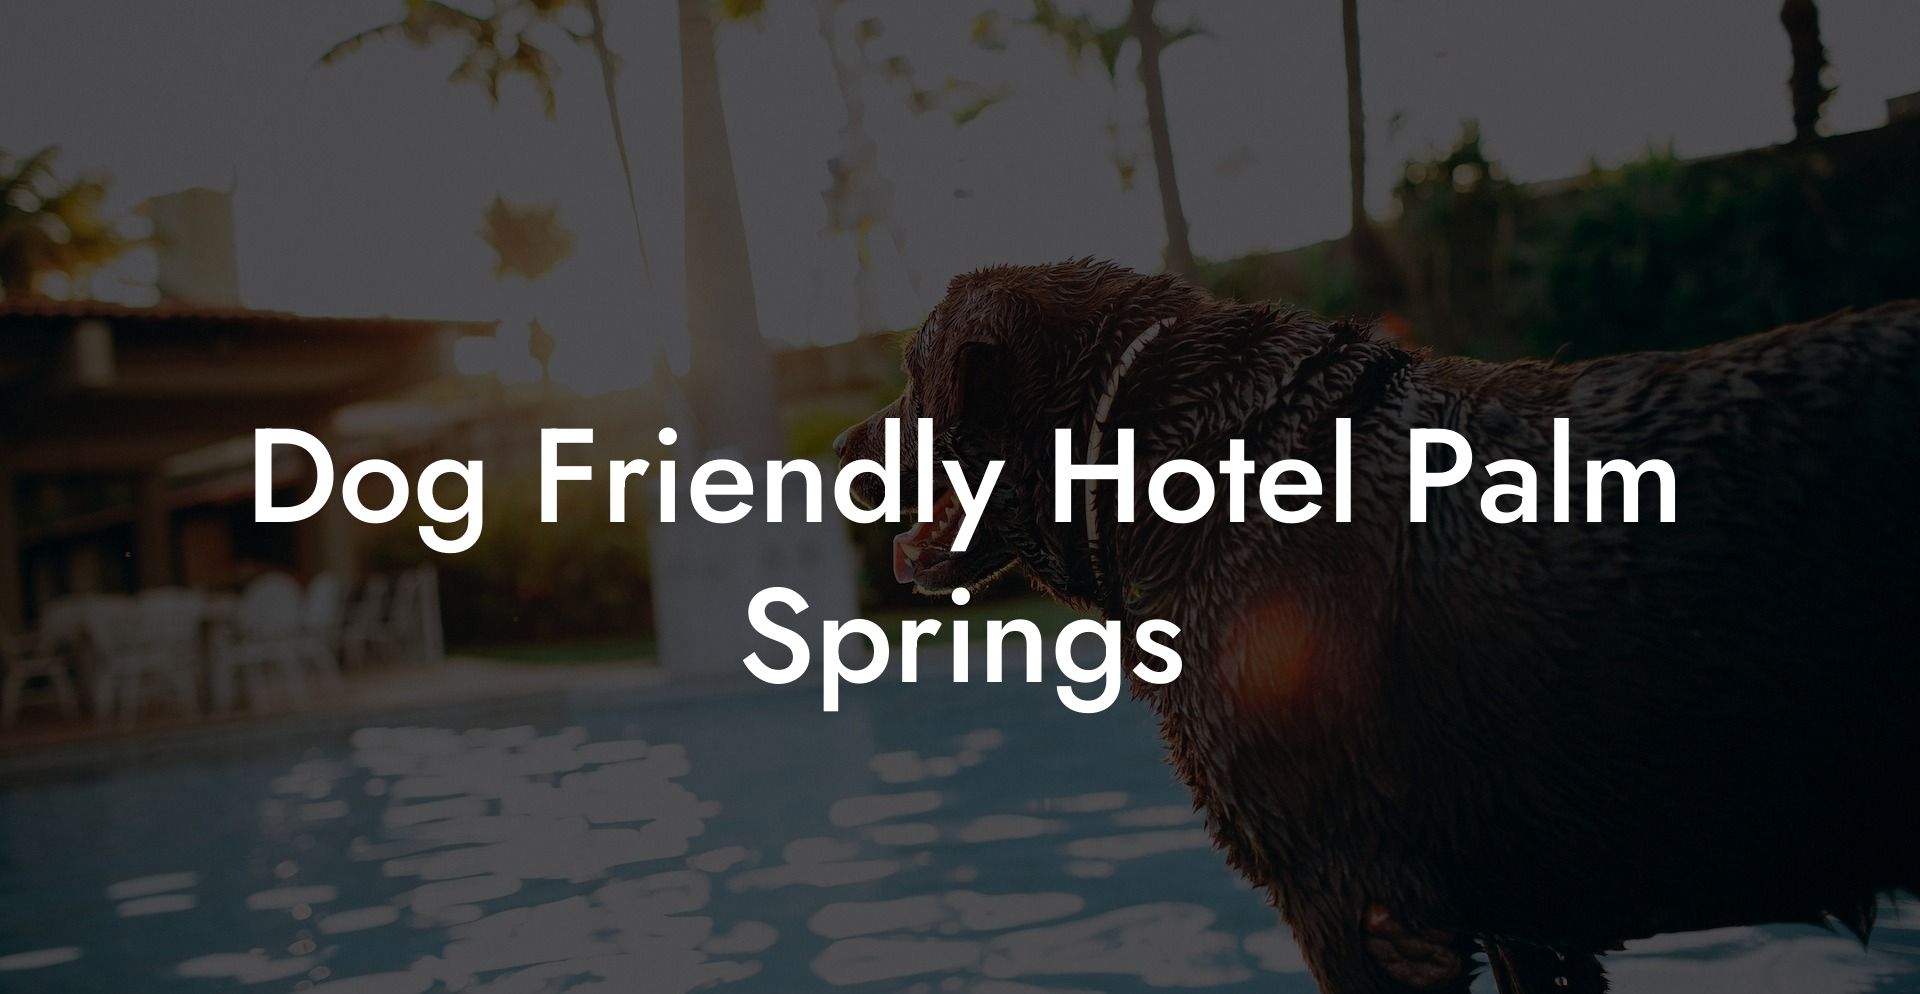 Dog Friendly Hotel Palm Springs